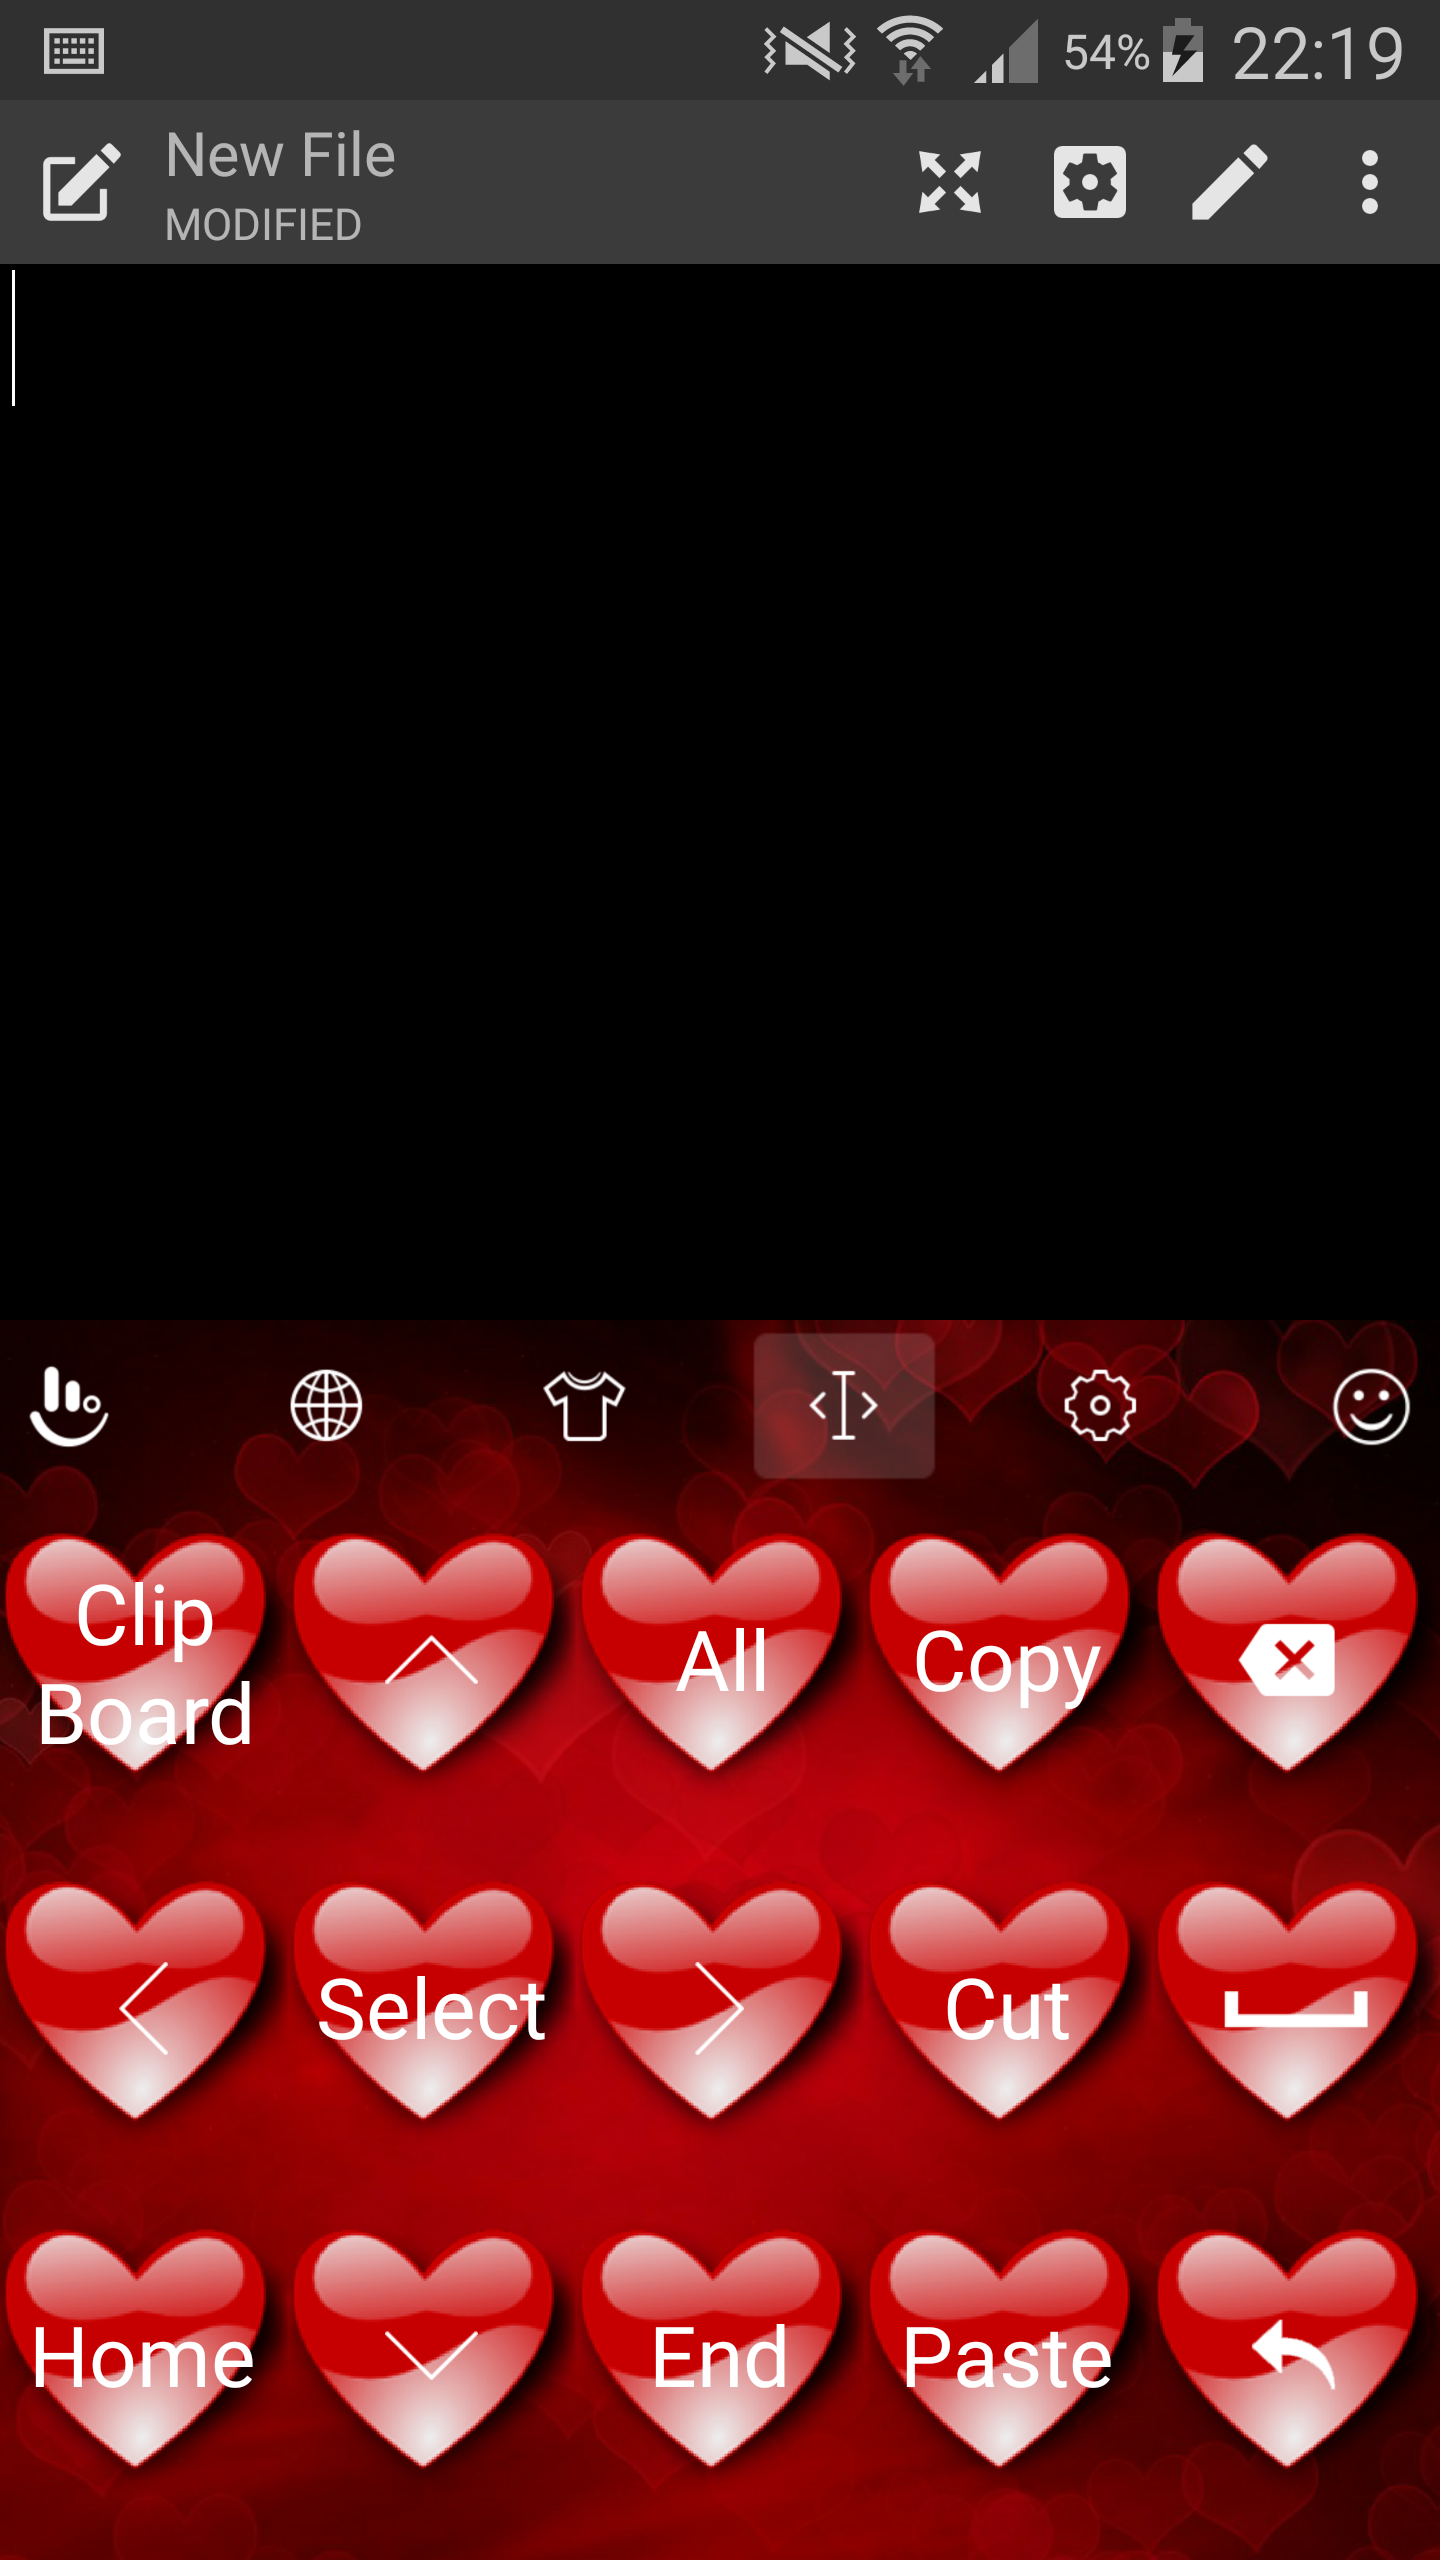 Android application Keyboard Theme V Love Hearts screenshort